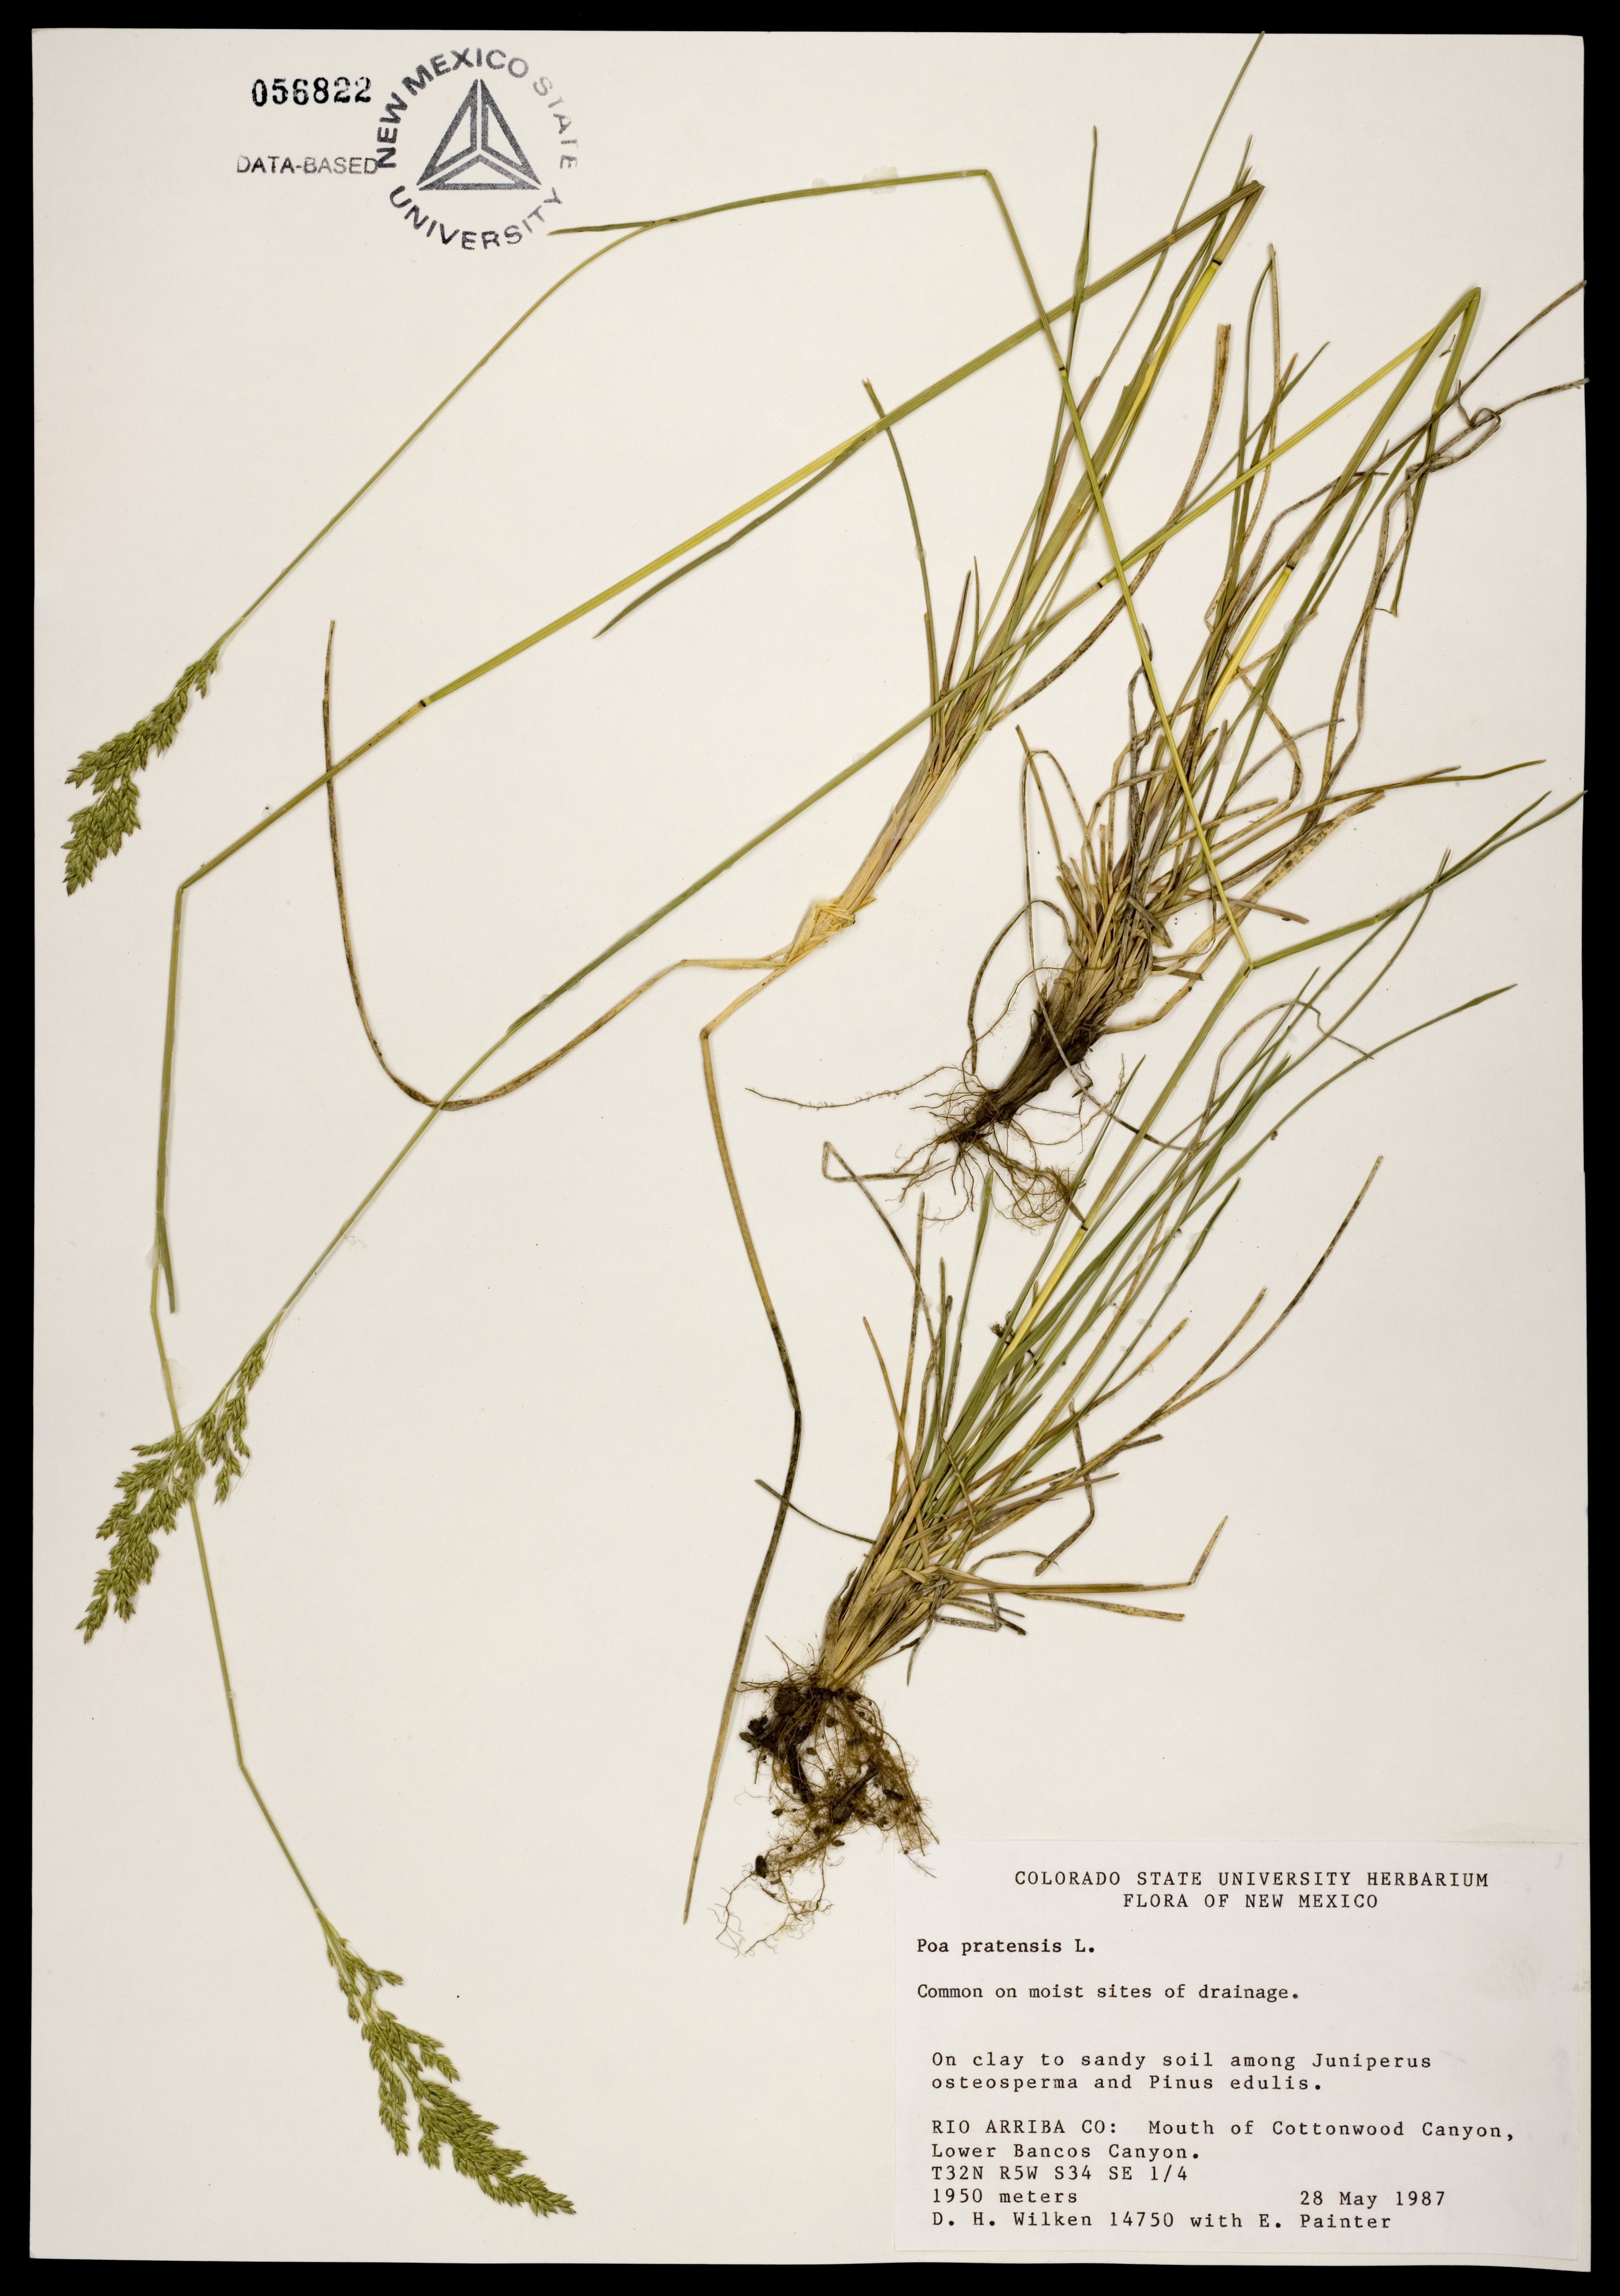 Herbarium specimen showing entire plants